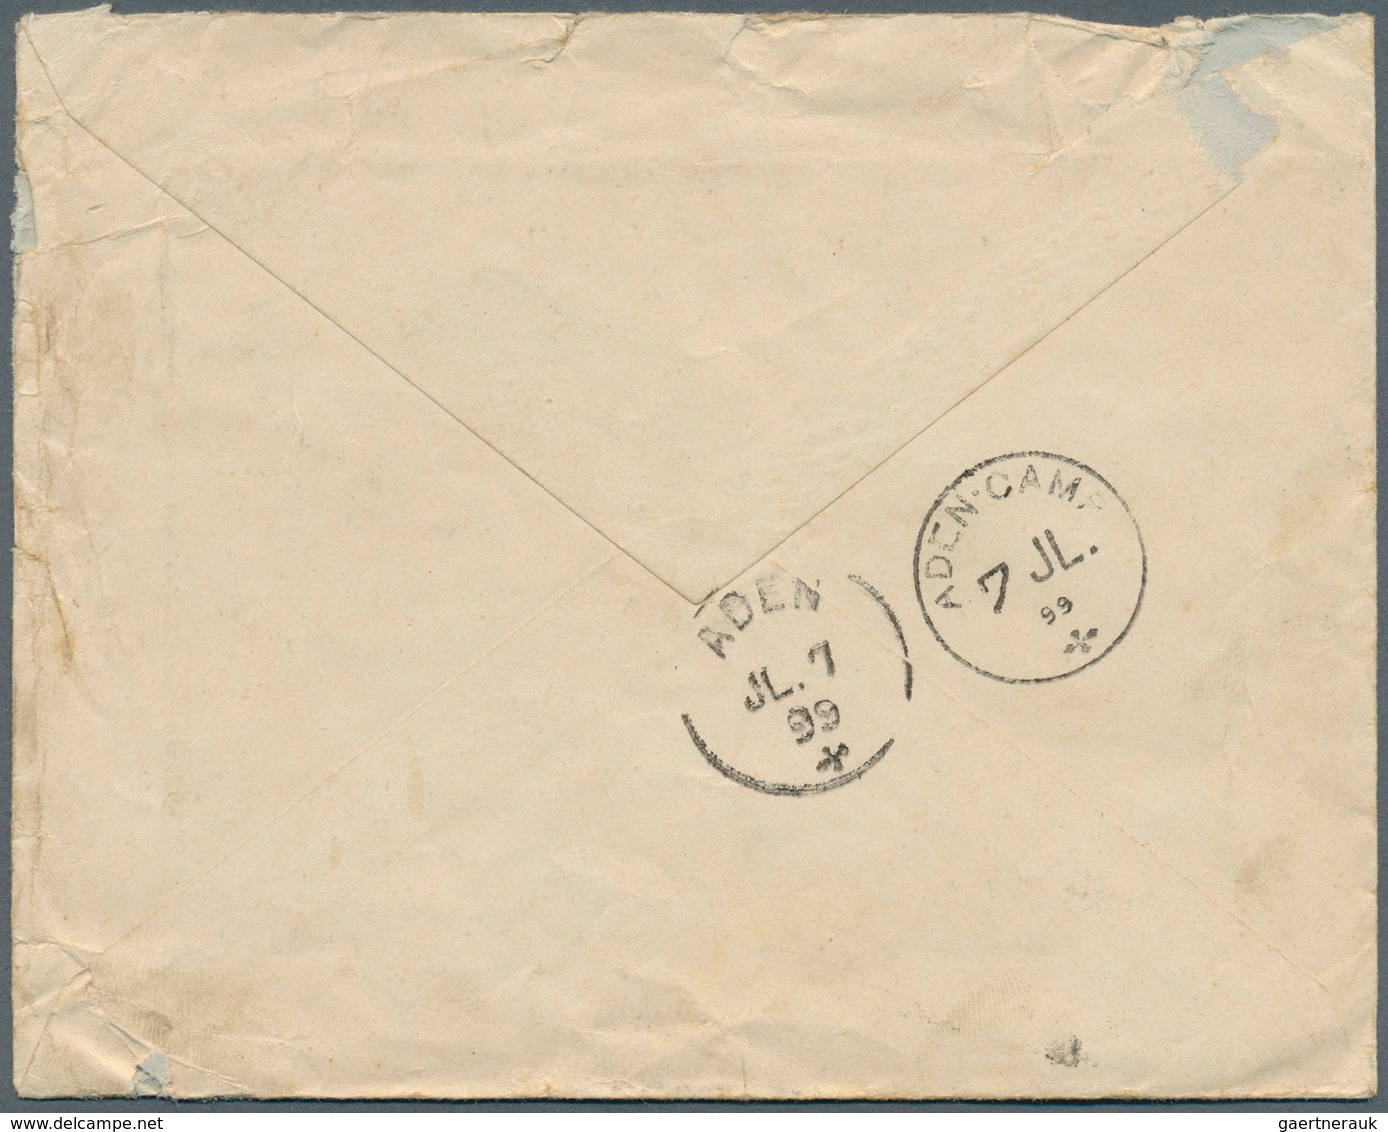 22002 Aden: 1899, Incoming Mail, PERIM: Netherlands 5 C. (pair) 3 C. Tied S'GRAVENHAGE 24 JUN 99" To 2nd O - Jemen